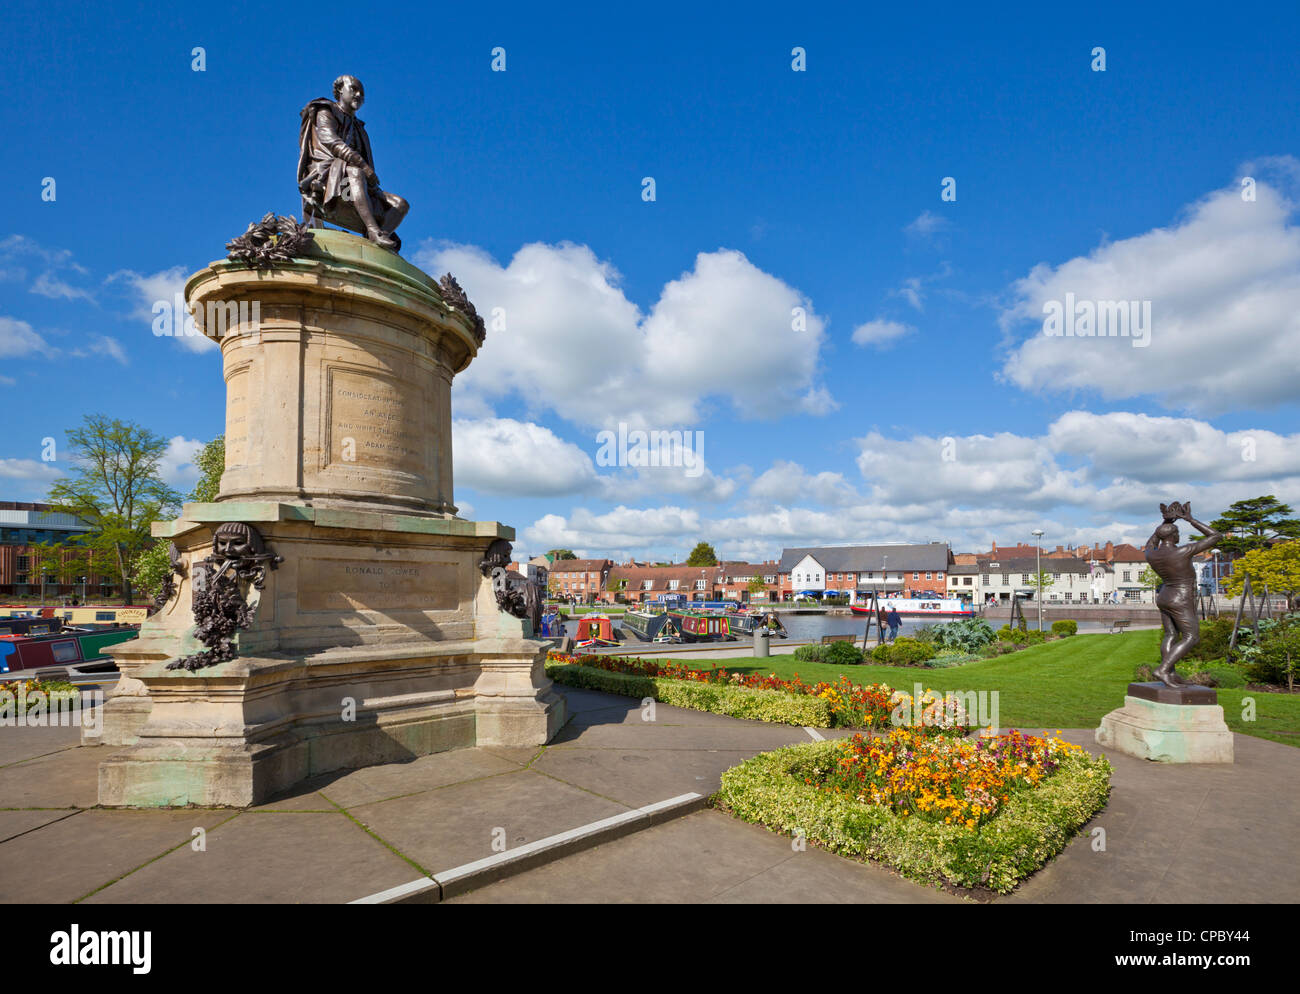 Bronze statue of William Shakespeare in a park Stratford upon Avon  Warwickshire England UK GB EU Europe Stock Photo